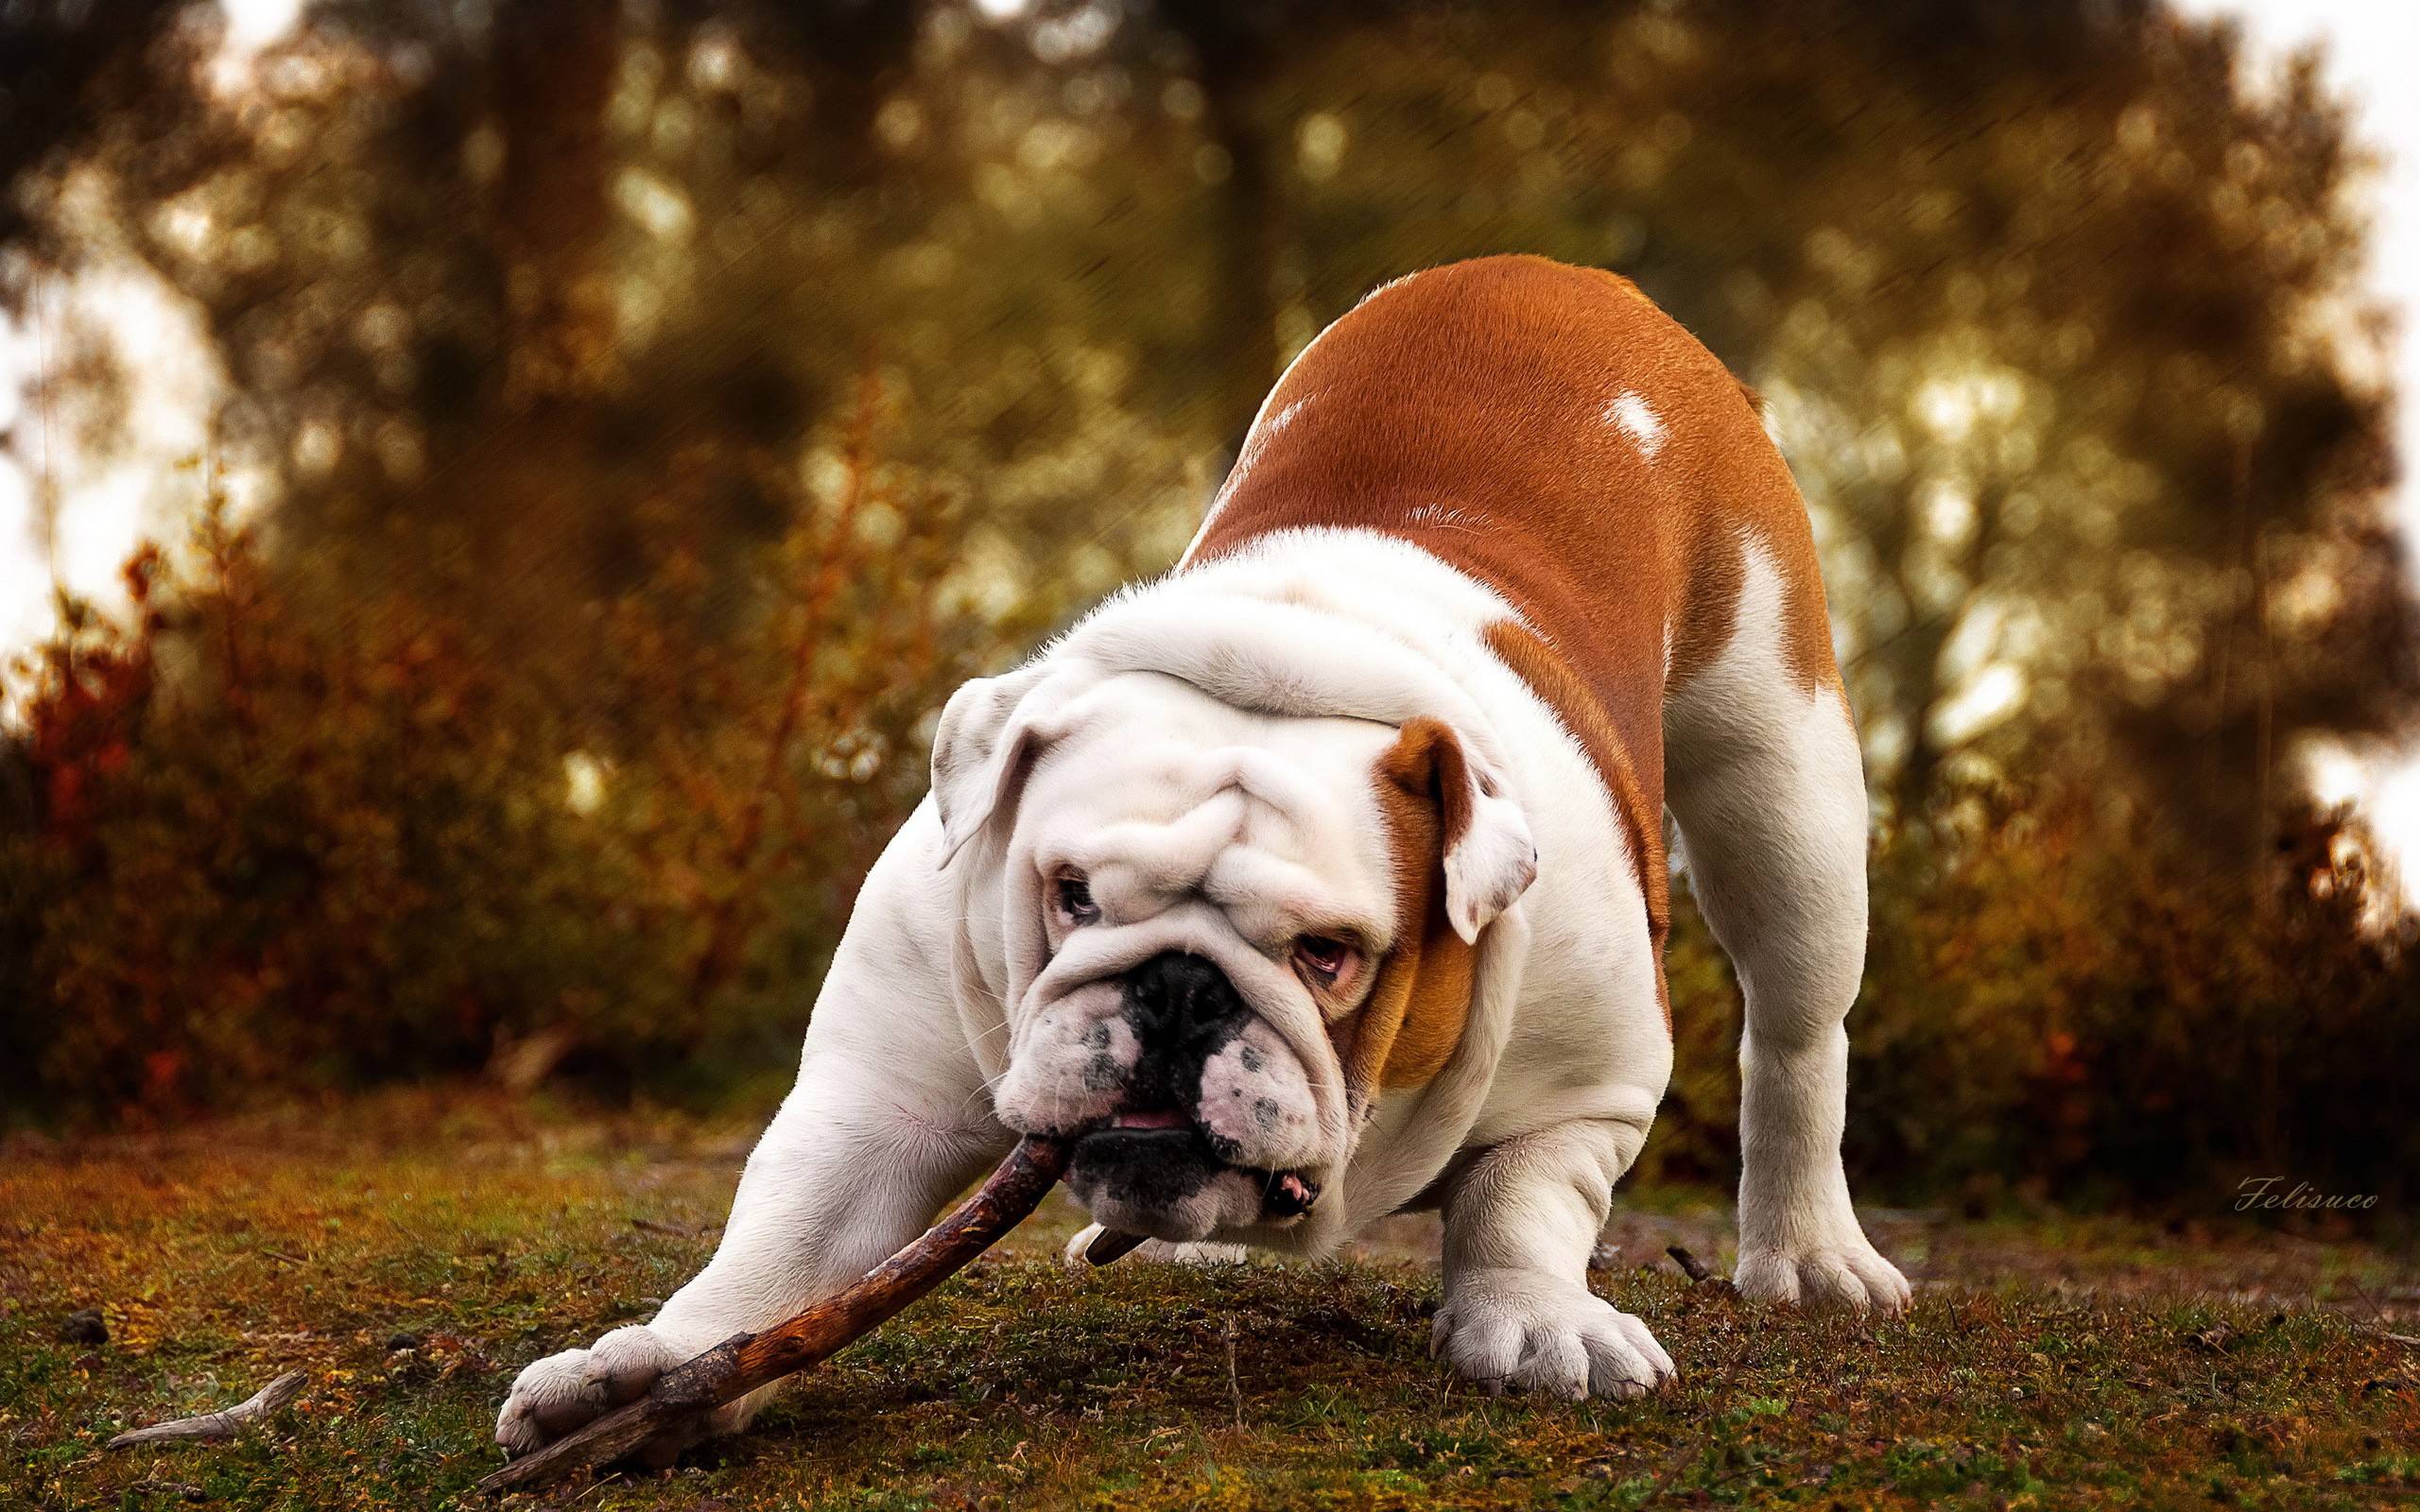 Best Bulldog Animal Wallpaper Full HD Wallpaper High resolution